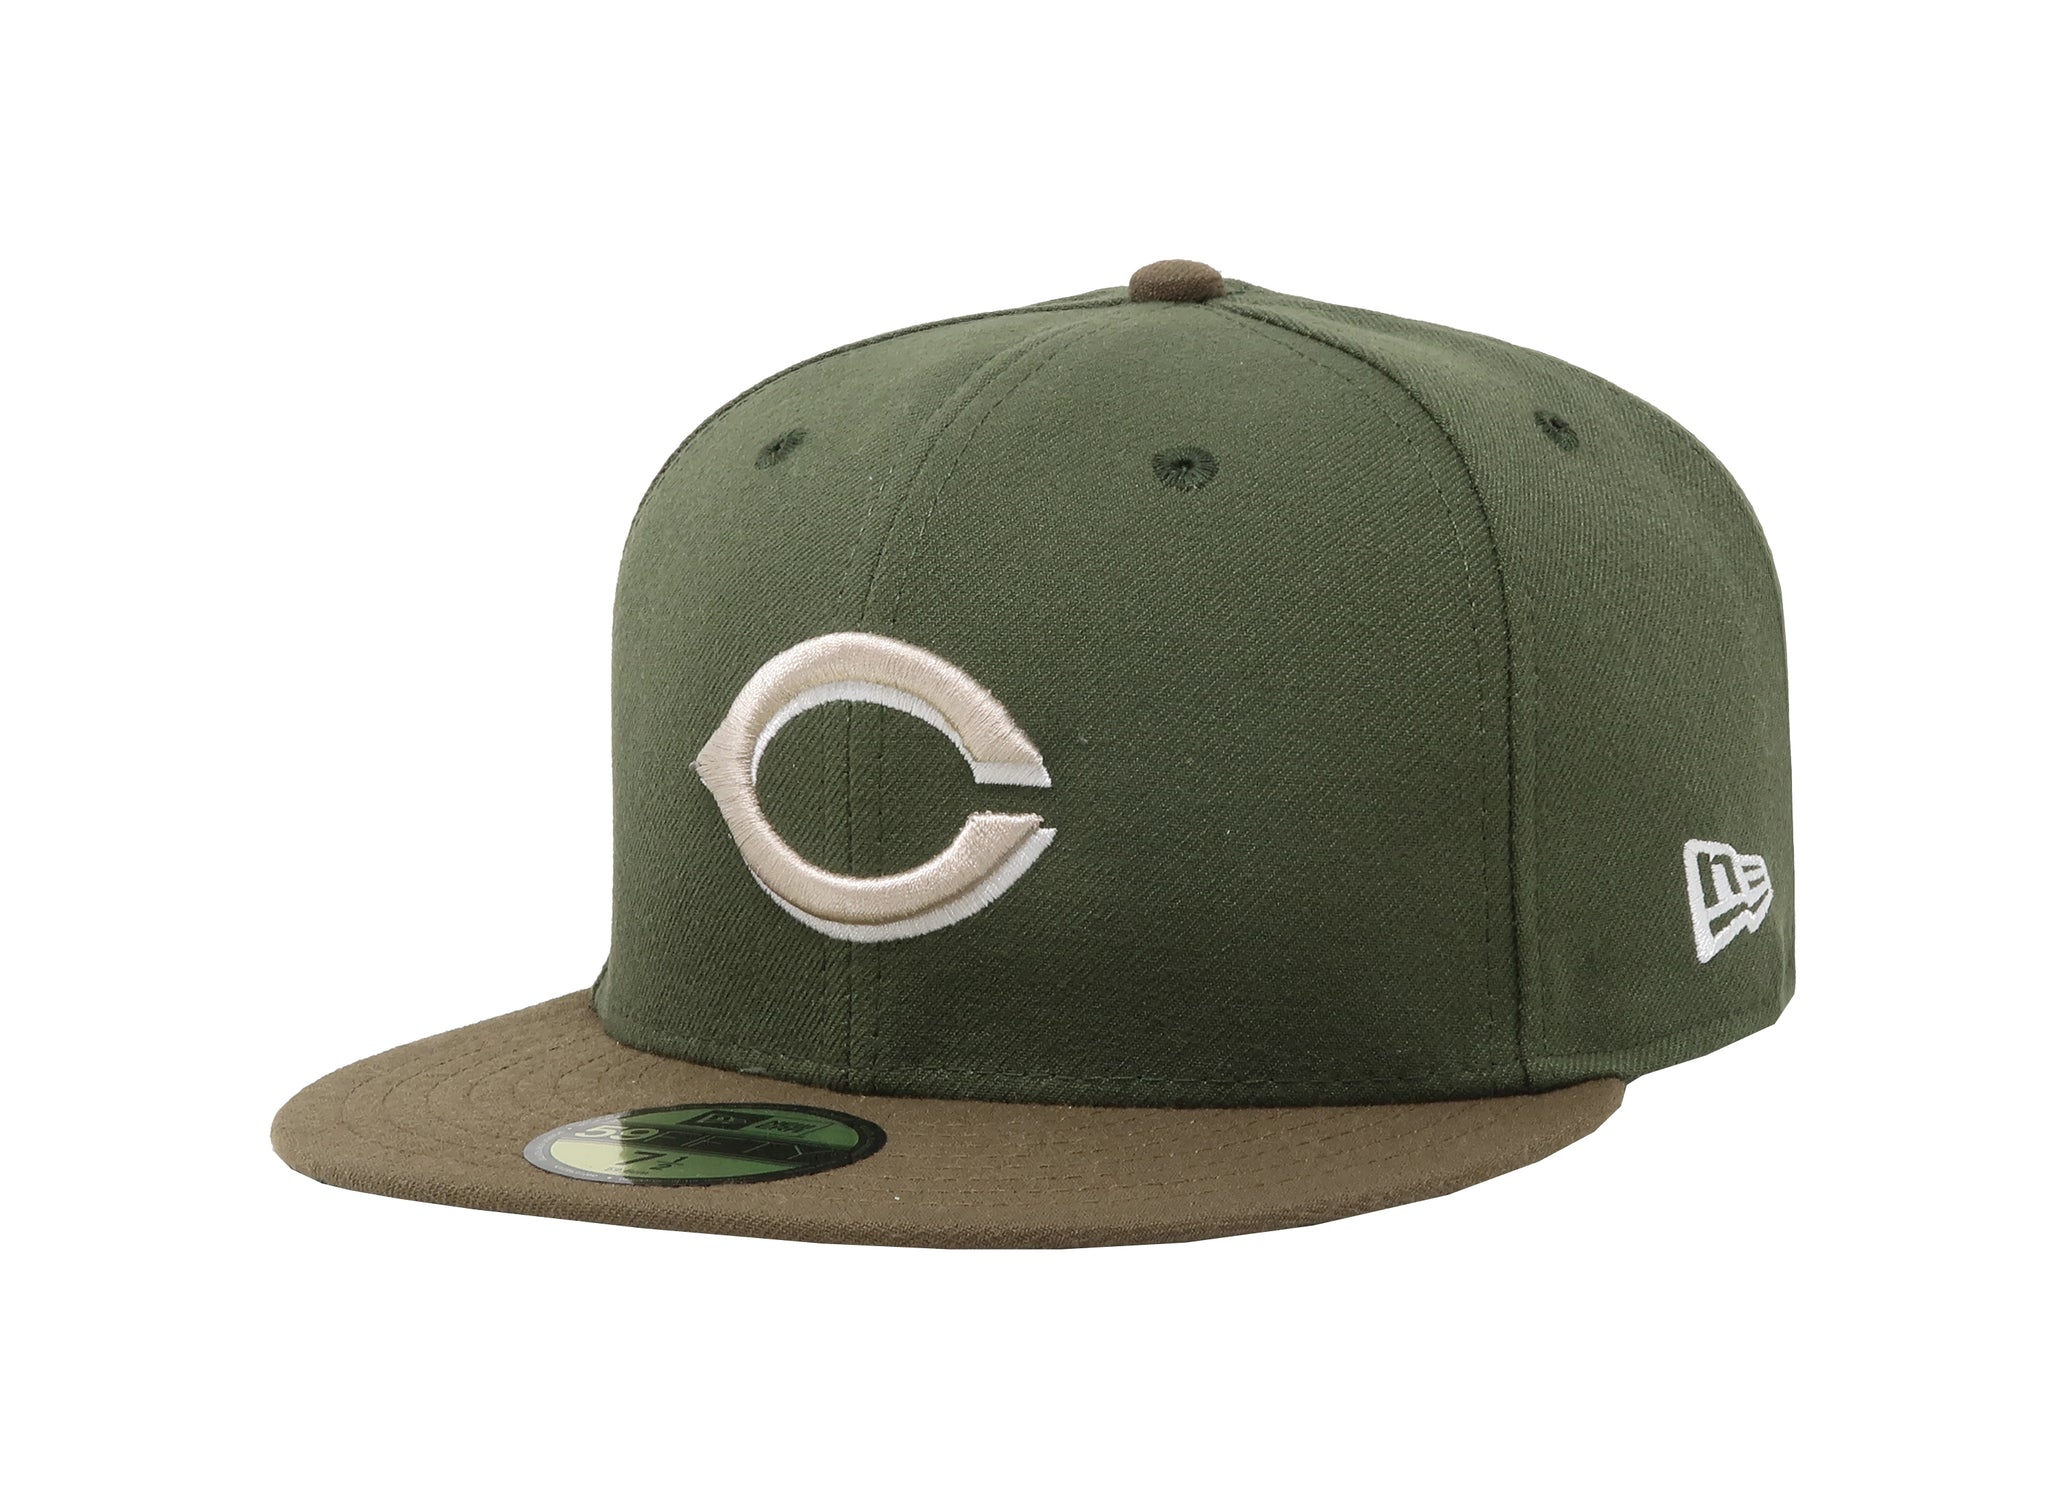 New Era MLB Cincinnati Reds Olive Green/Brown Cap